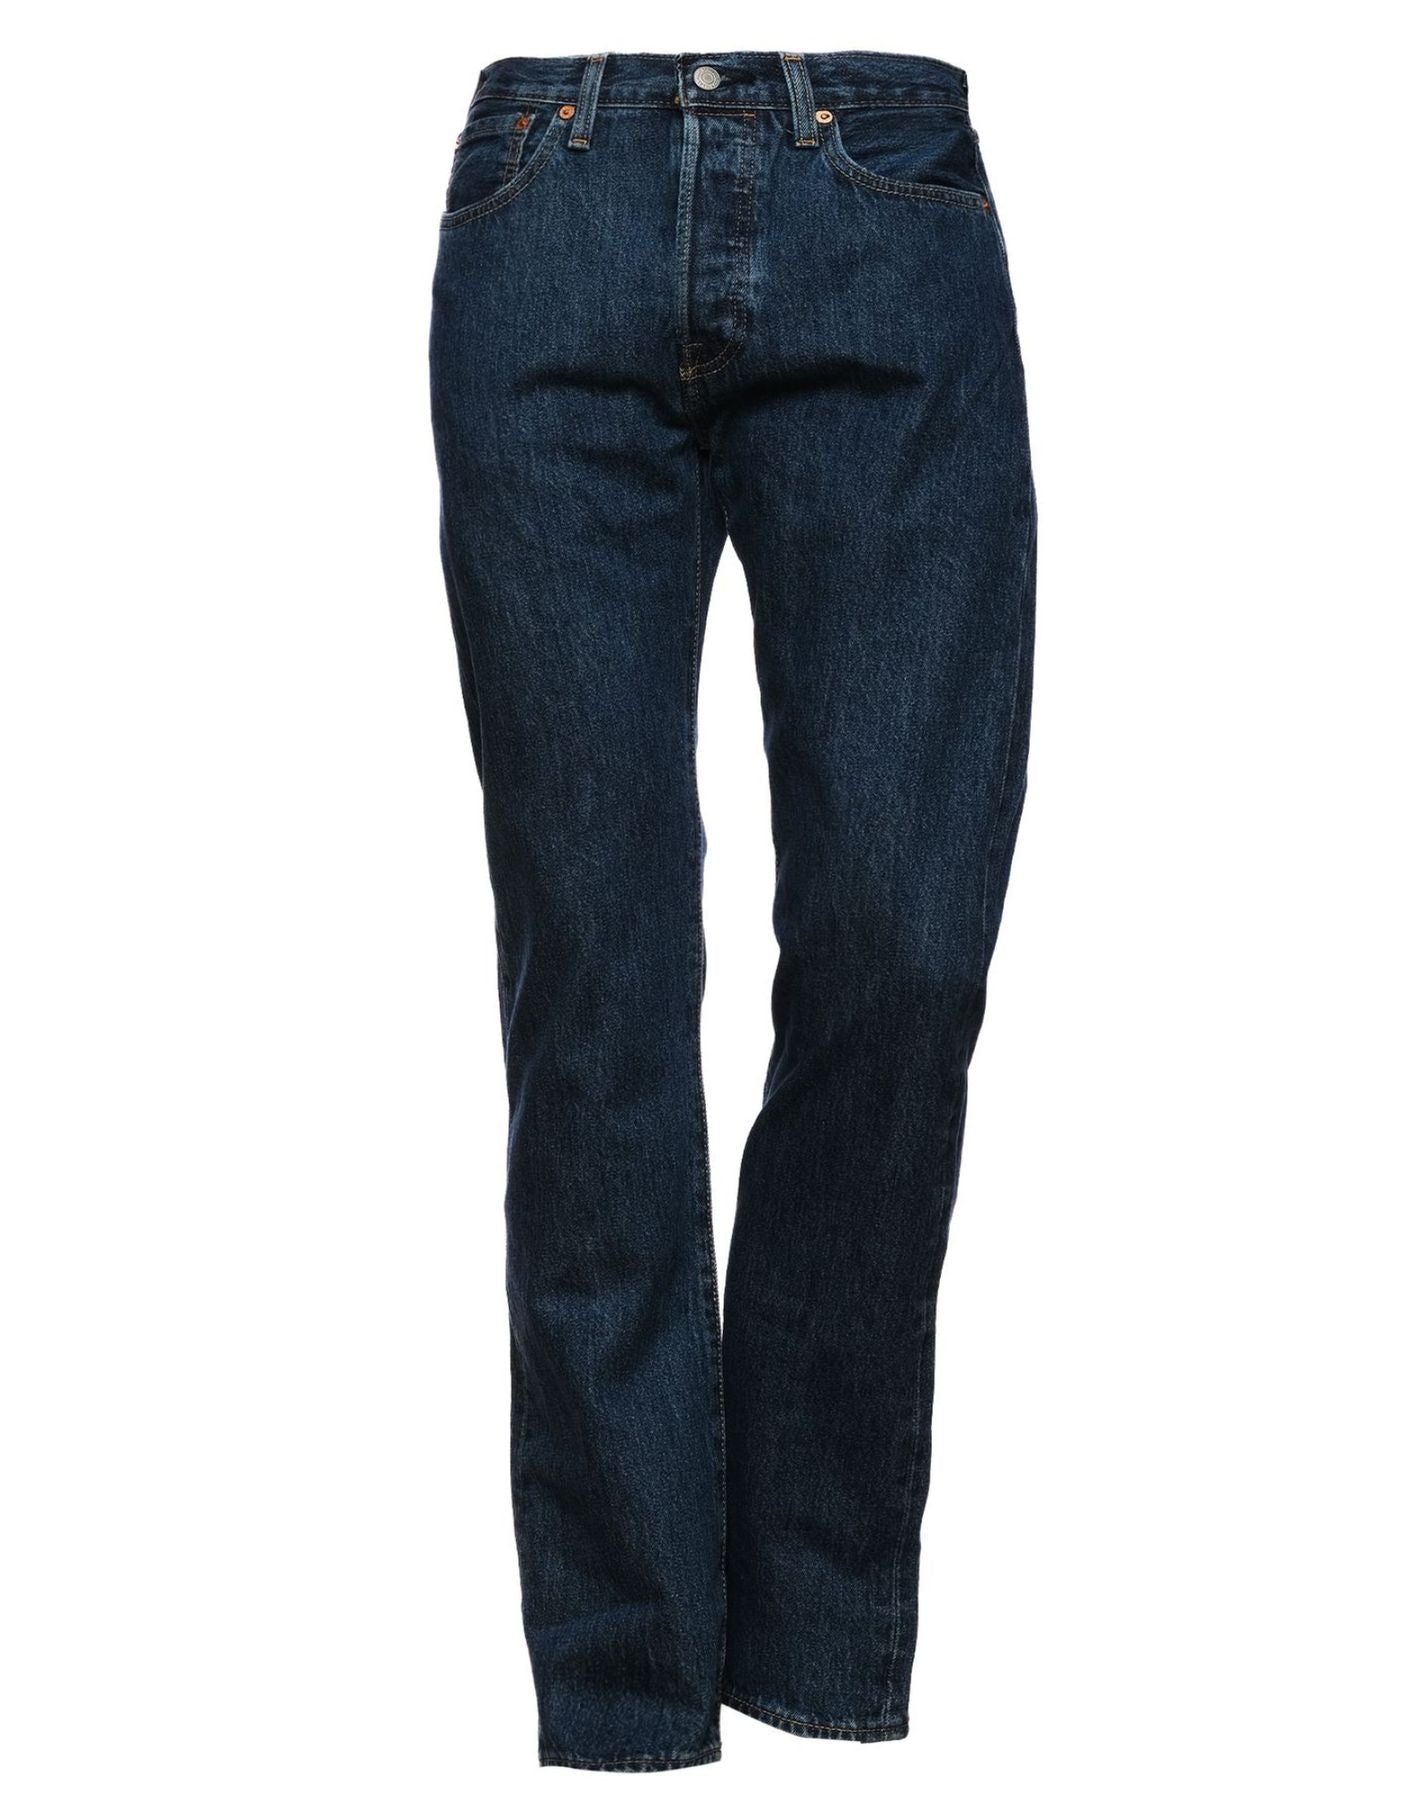 Jeans for man 00501 0114 blue Levi's